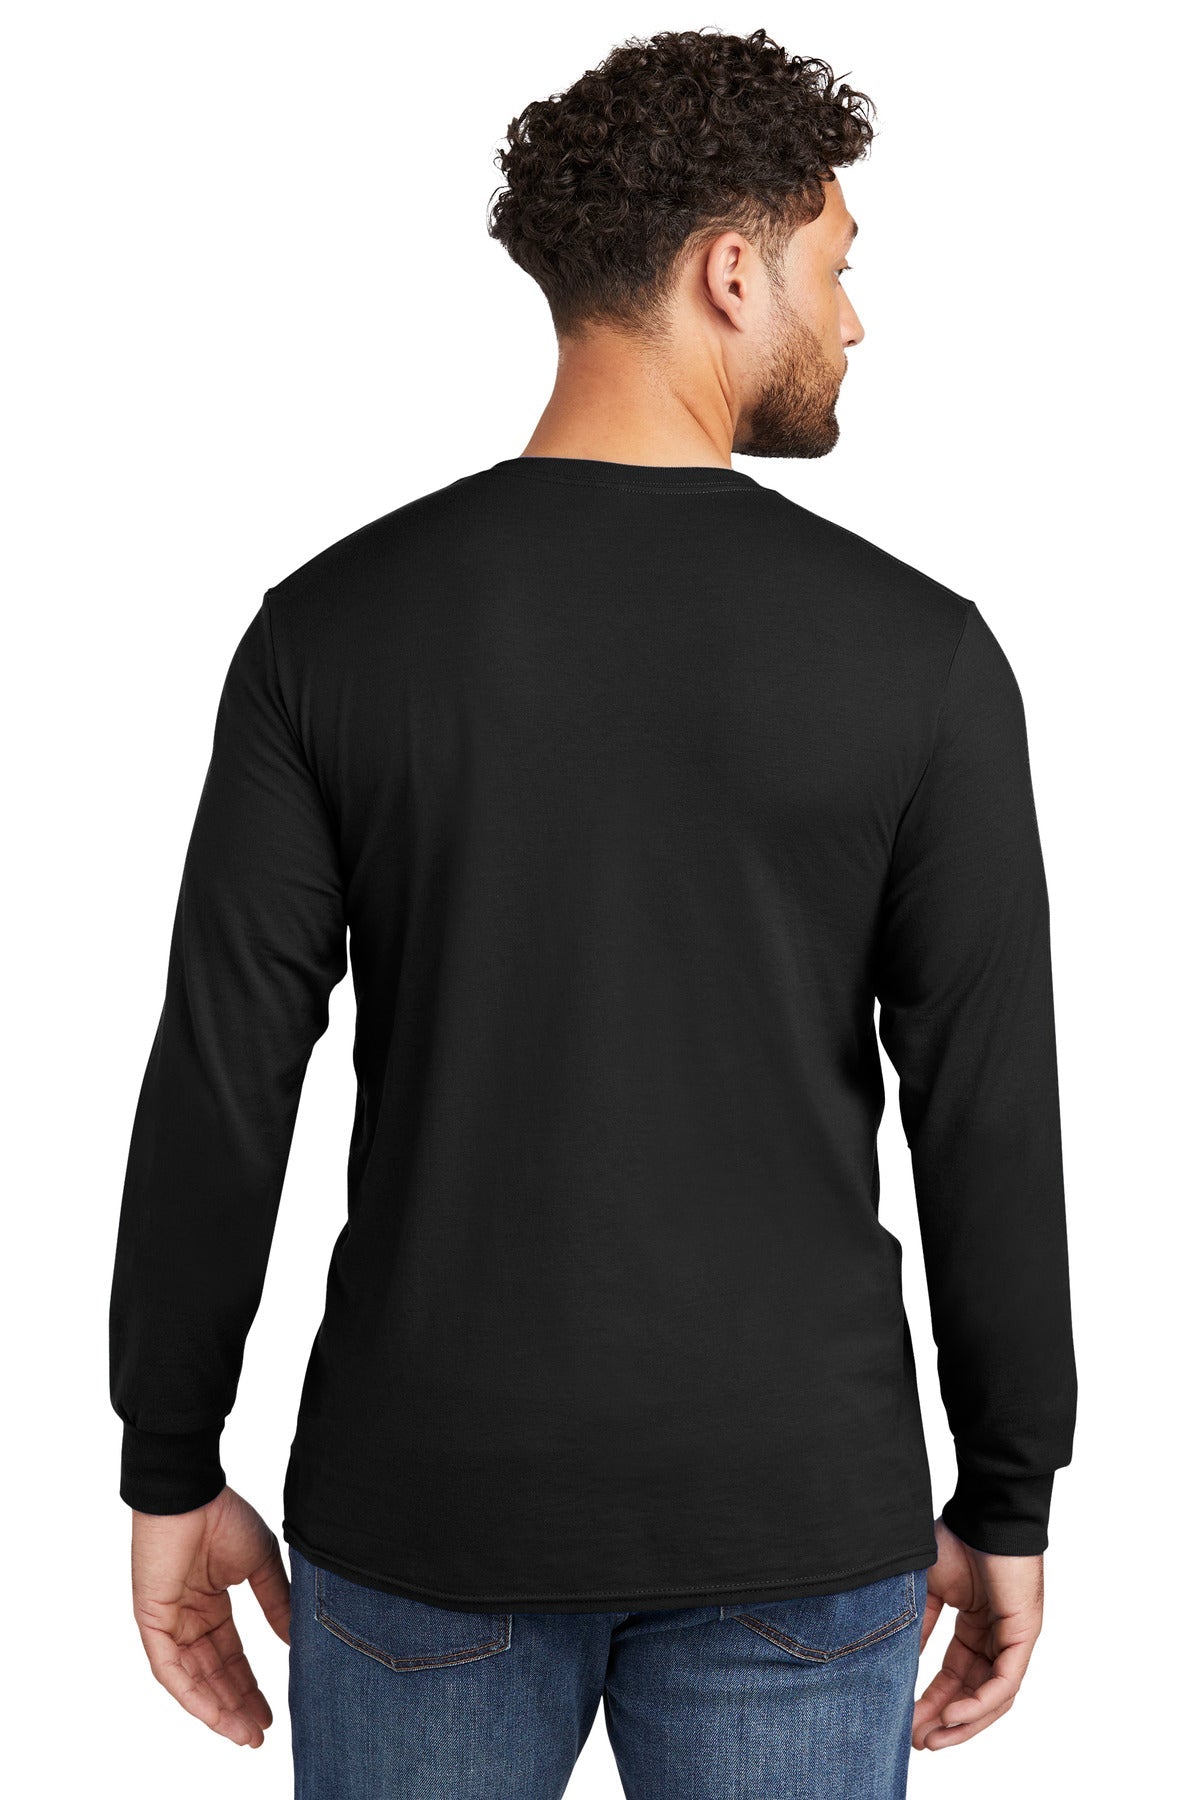 JERZEES® Premium Blend Ring Spun Long Sleeve T-Shirt 560LS - DFW Impression